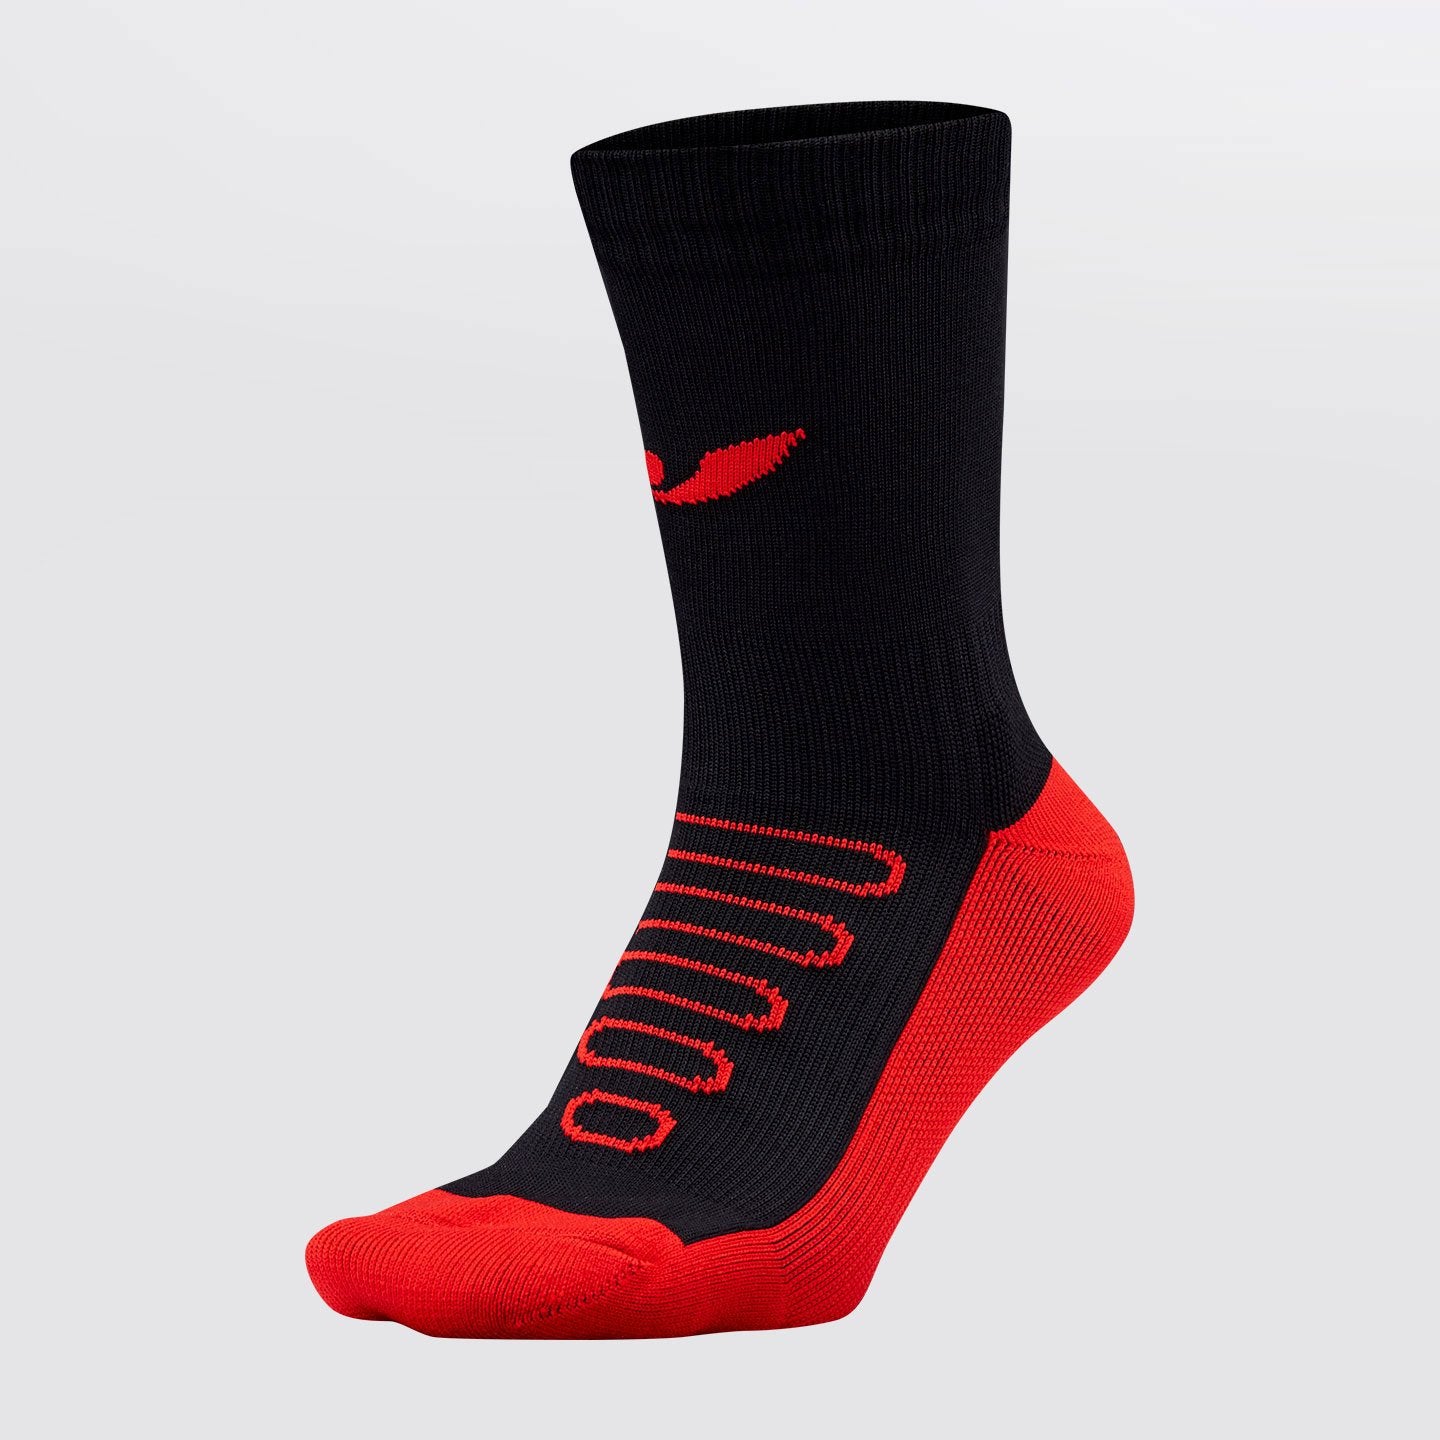 Concave Performance Mid Socks - Black/Red